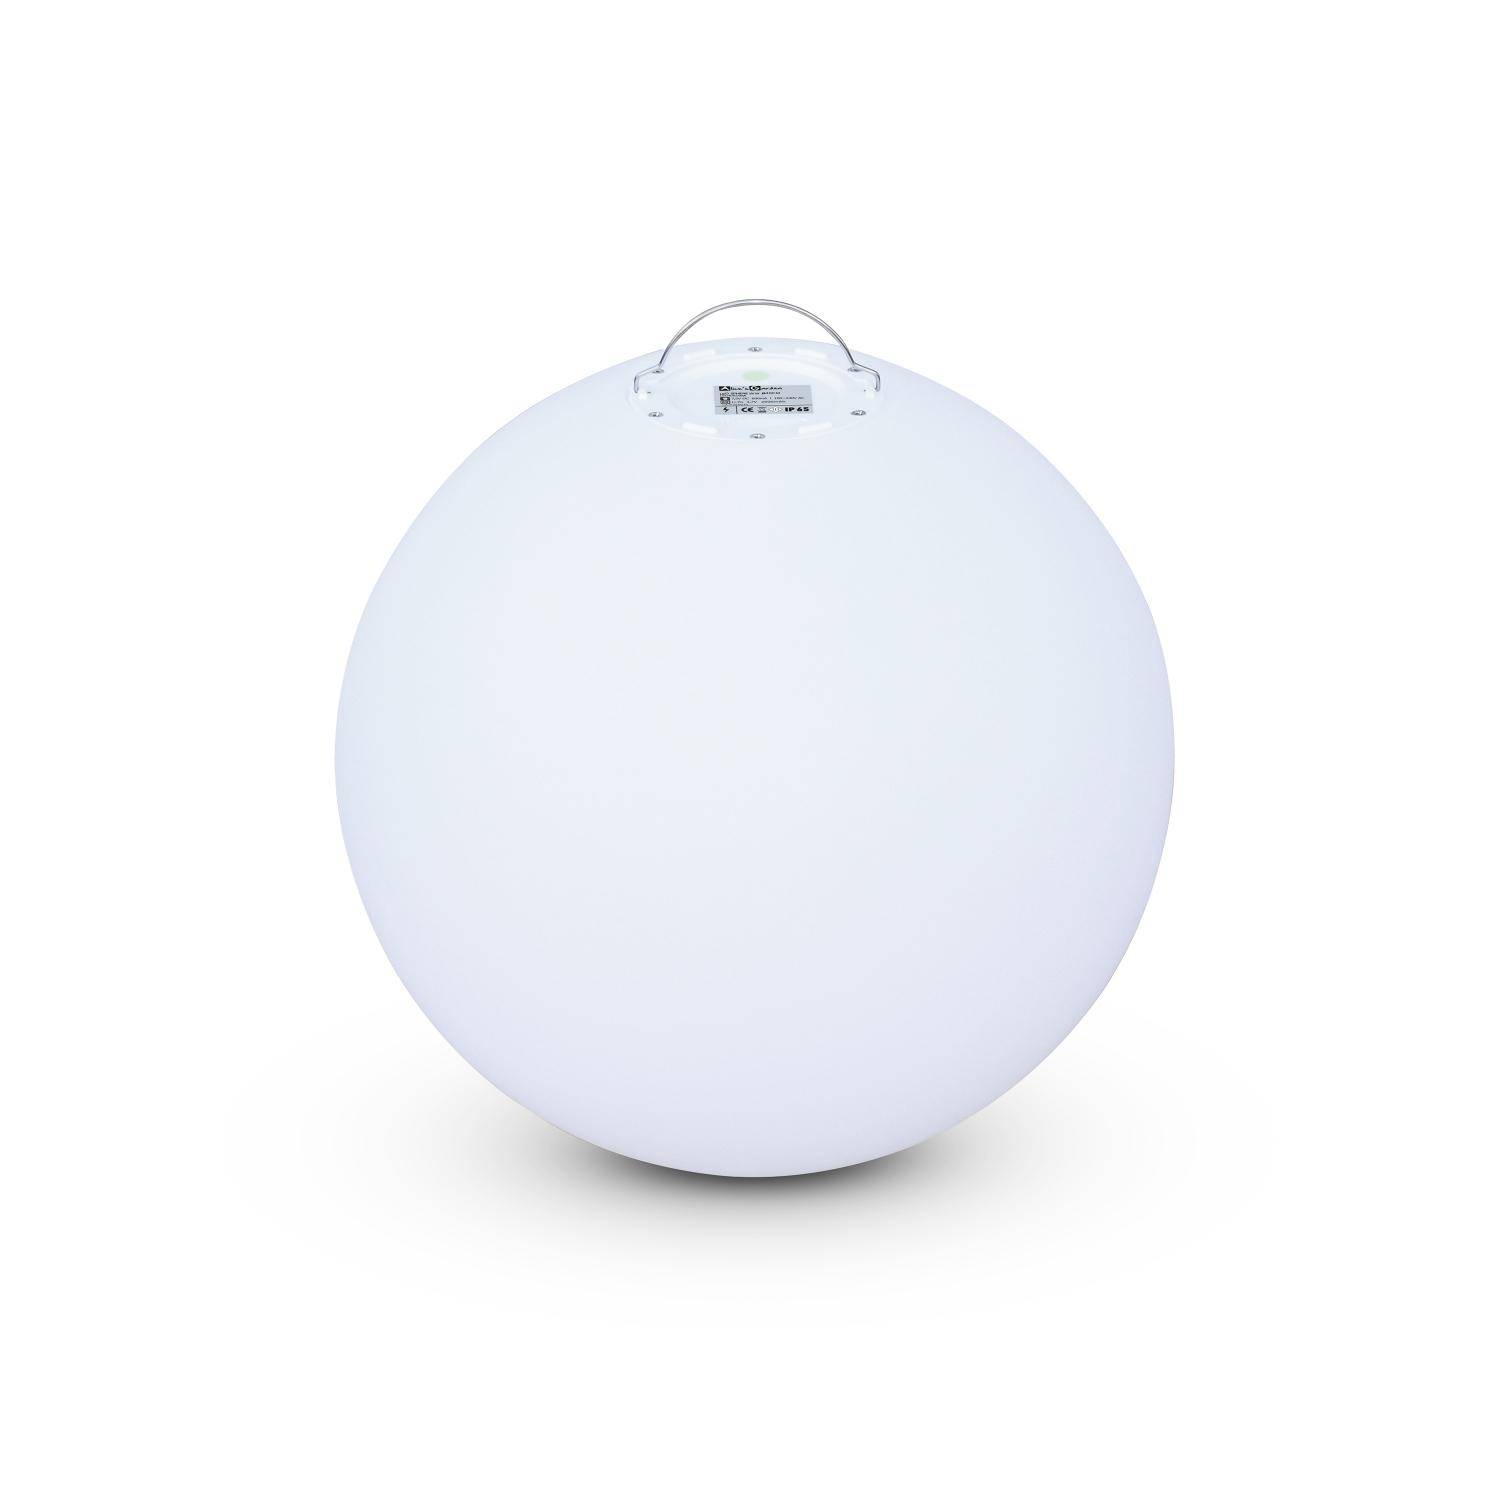 40cm spherical LED lamp – Decorative light sphere, remote control, Warm white Photo2